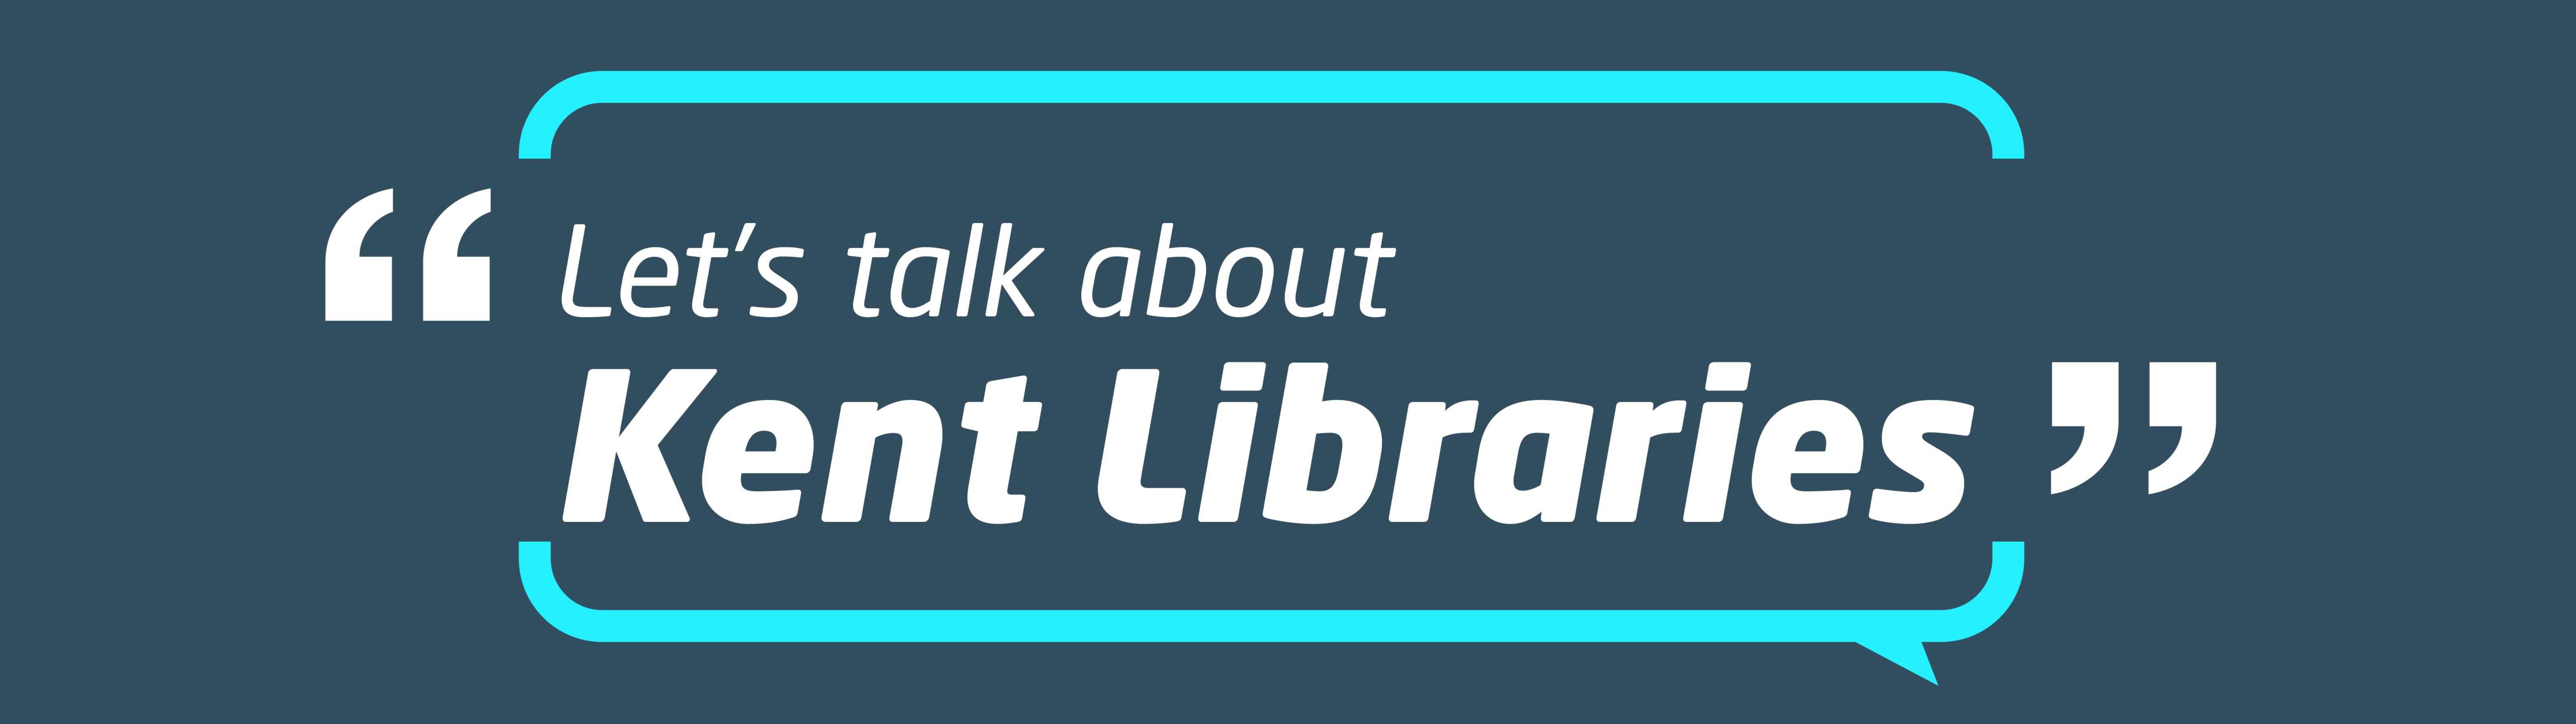 Let's talk about Kent Libraries